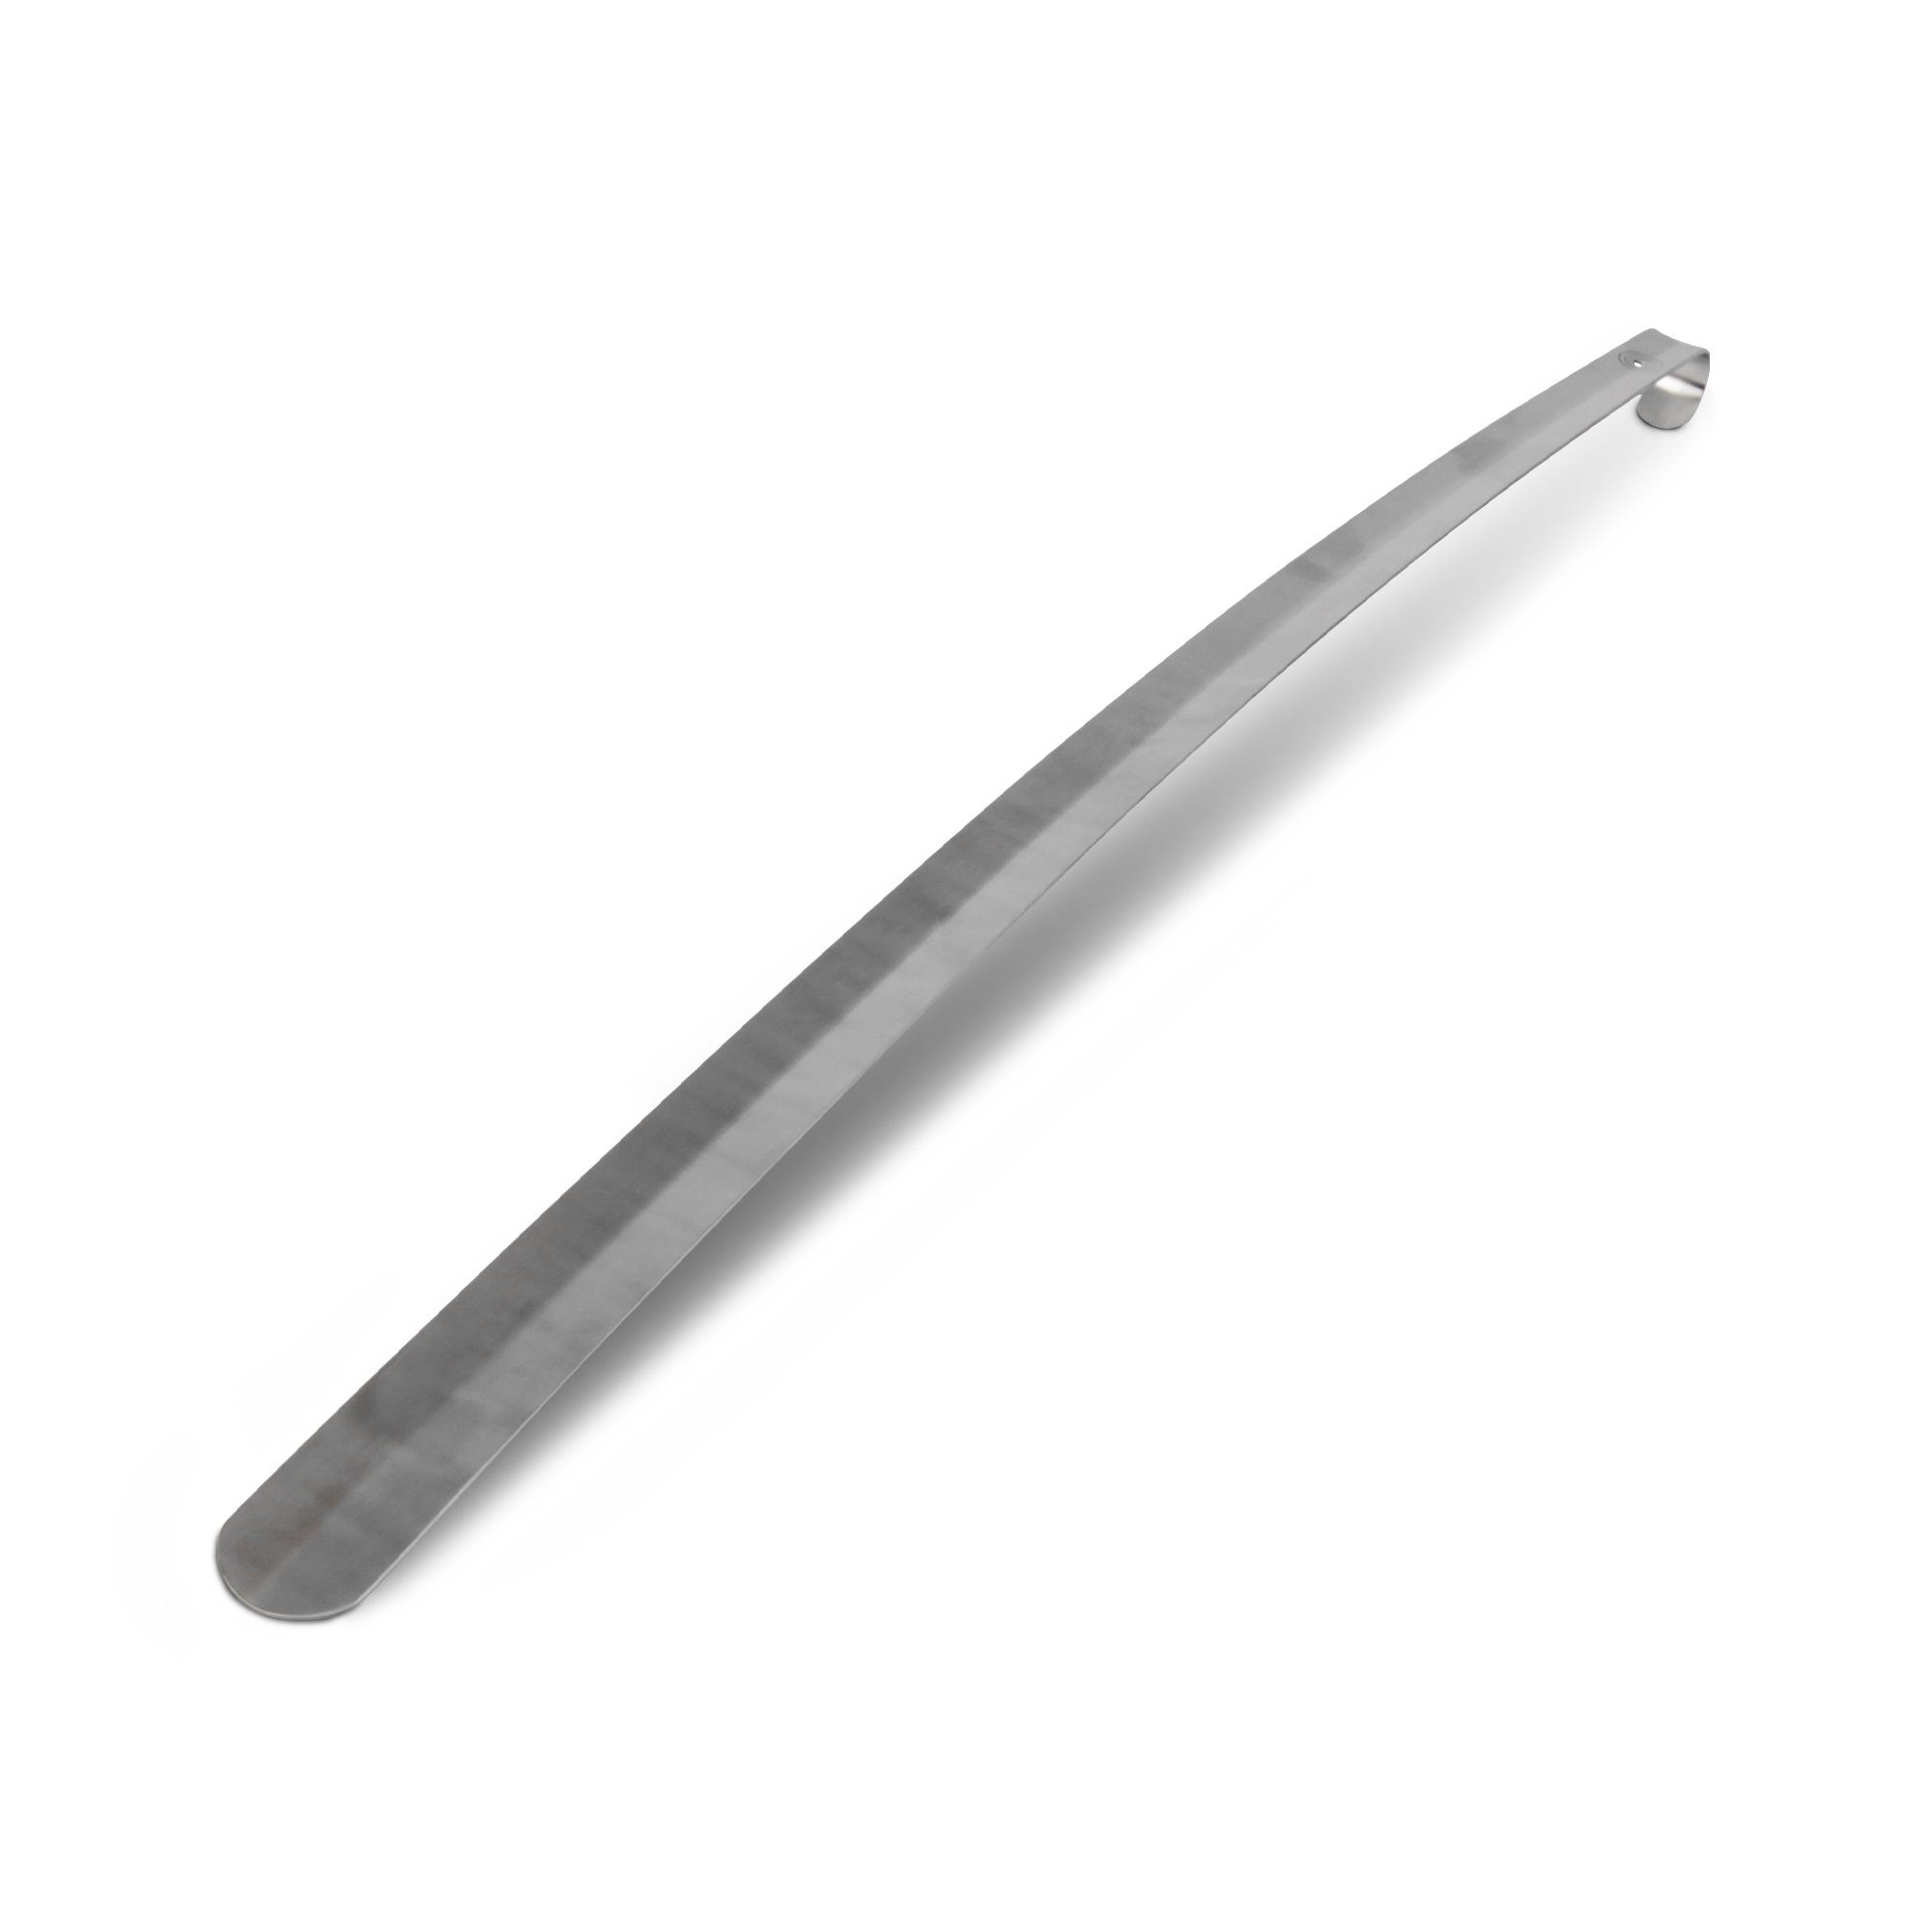 Pro Home Schuhlöffel Schuhanzieher XXL (79cm), Schuhanziehhilfe (Metall) - extra lang, sehr stabil Silber XXL